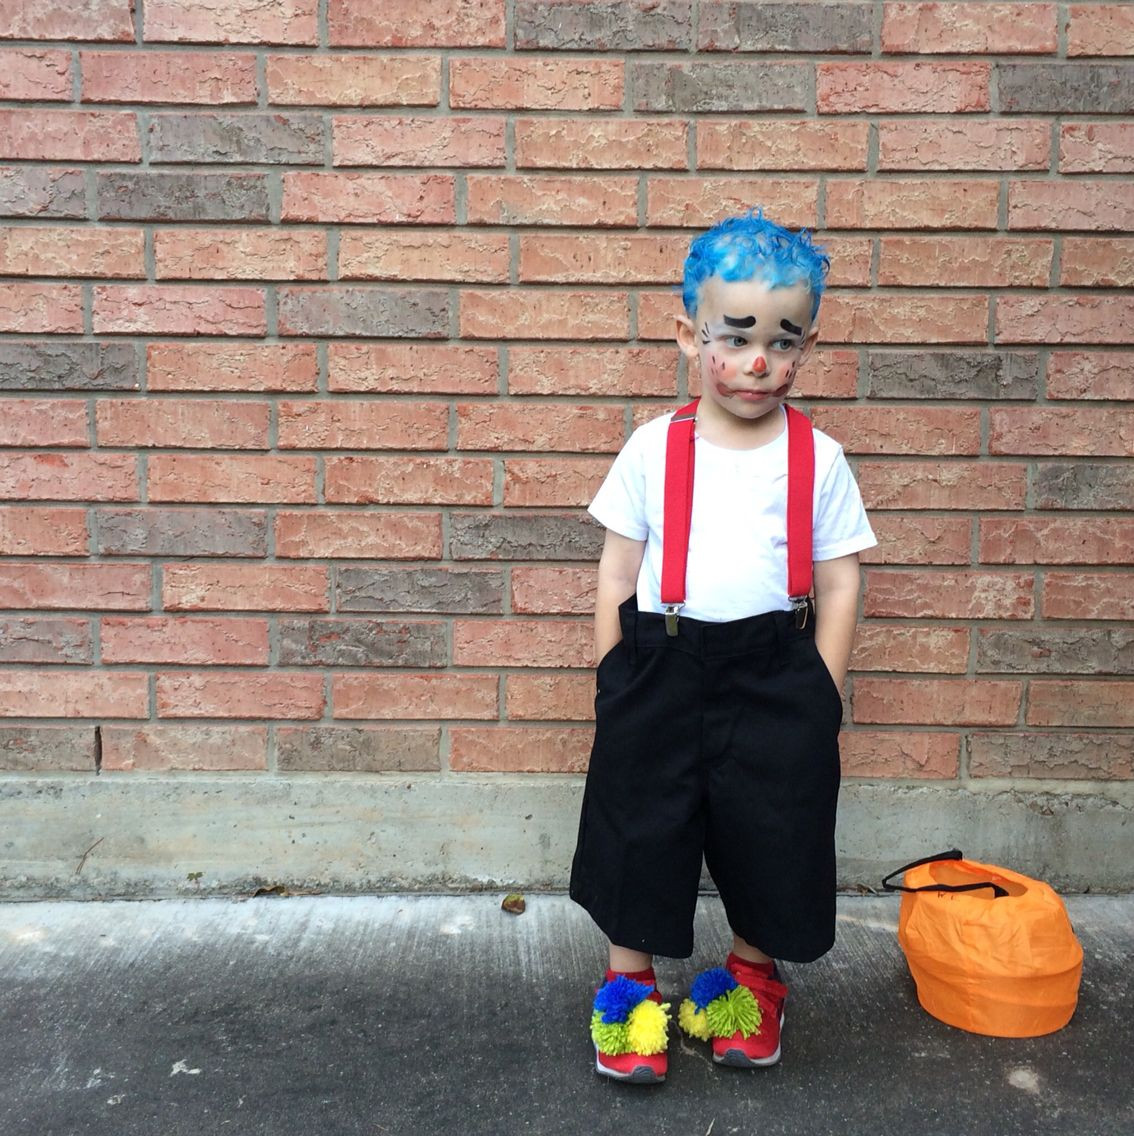 Best ideas about DIY Boy Costume
. Save or Pin DIY Kids Boy Clown Halloween Costume Yarn Pom poms Now.